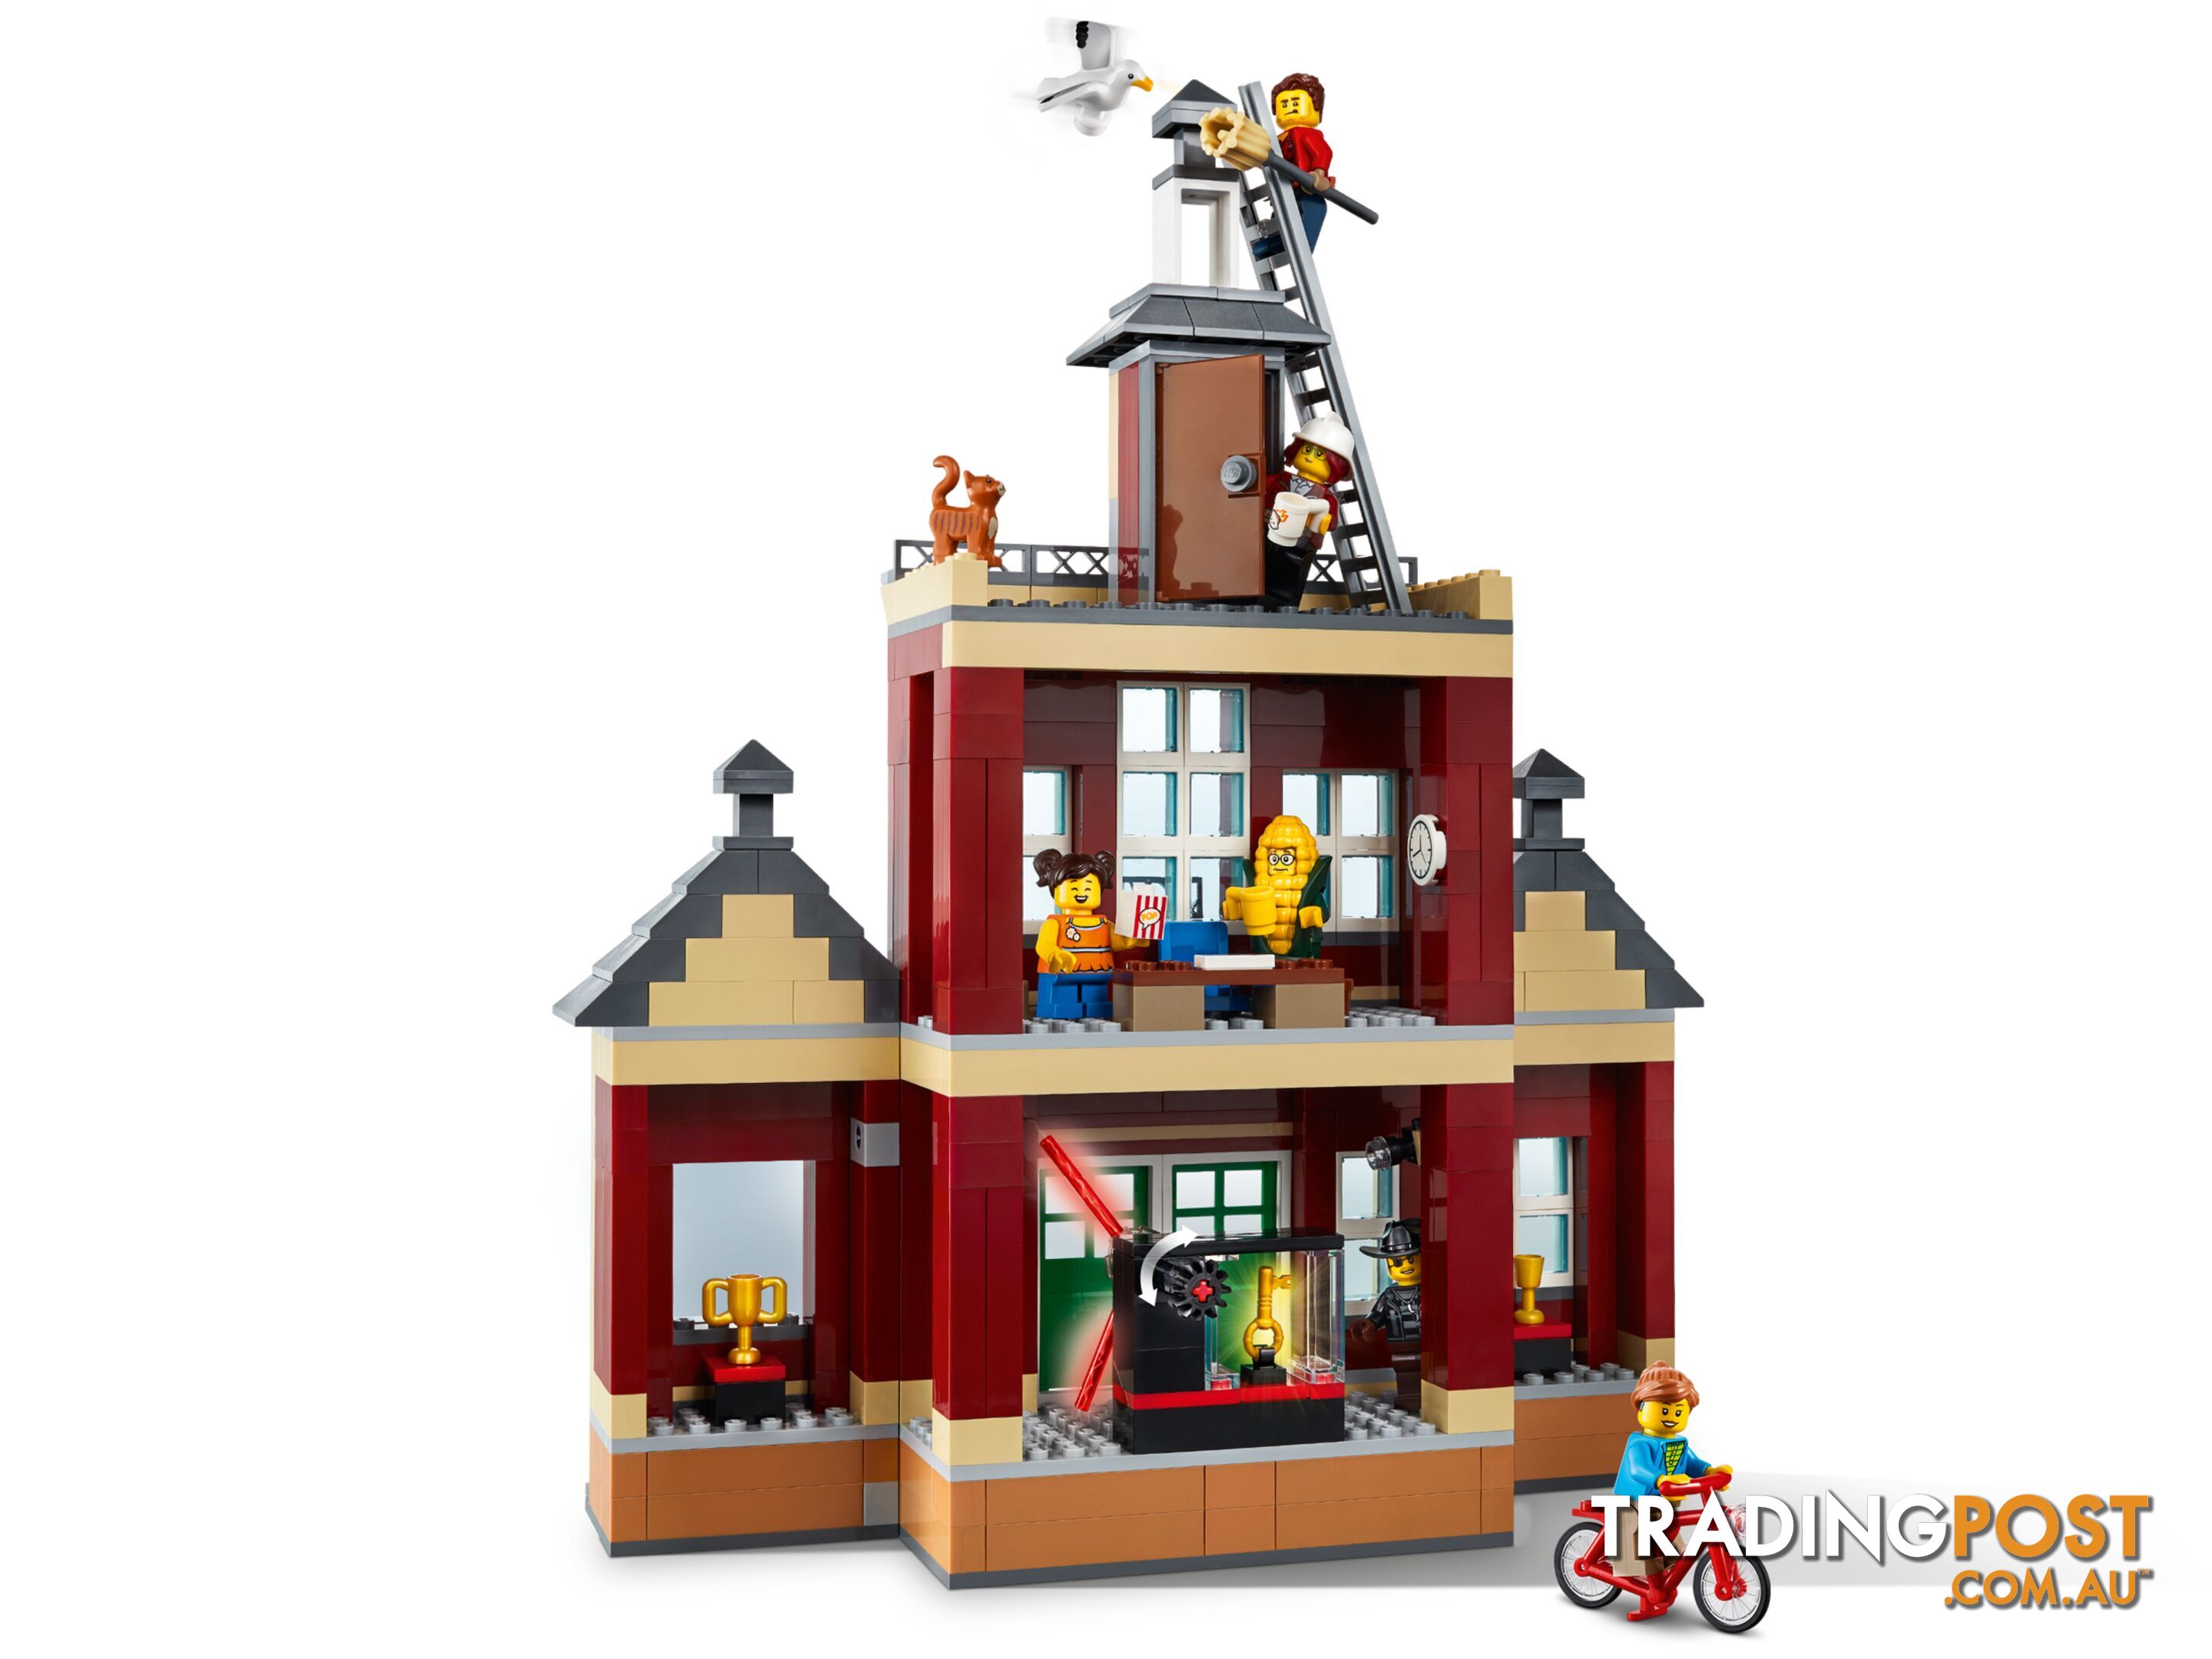 LEGO 60271 Main Square - City - 5702016669039